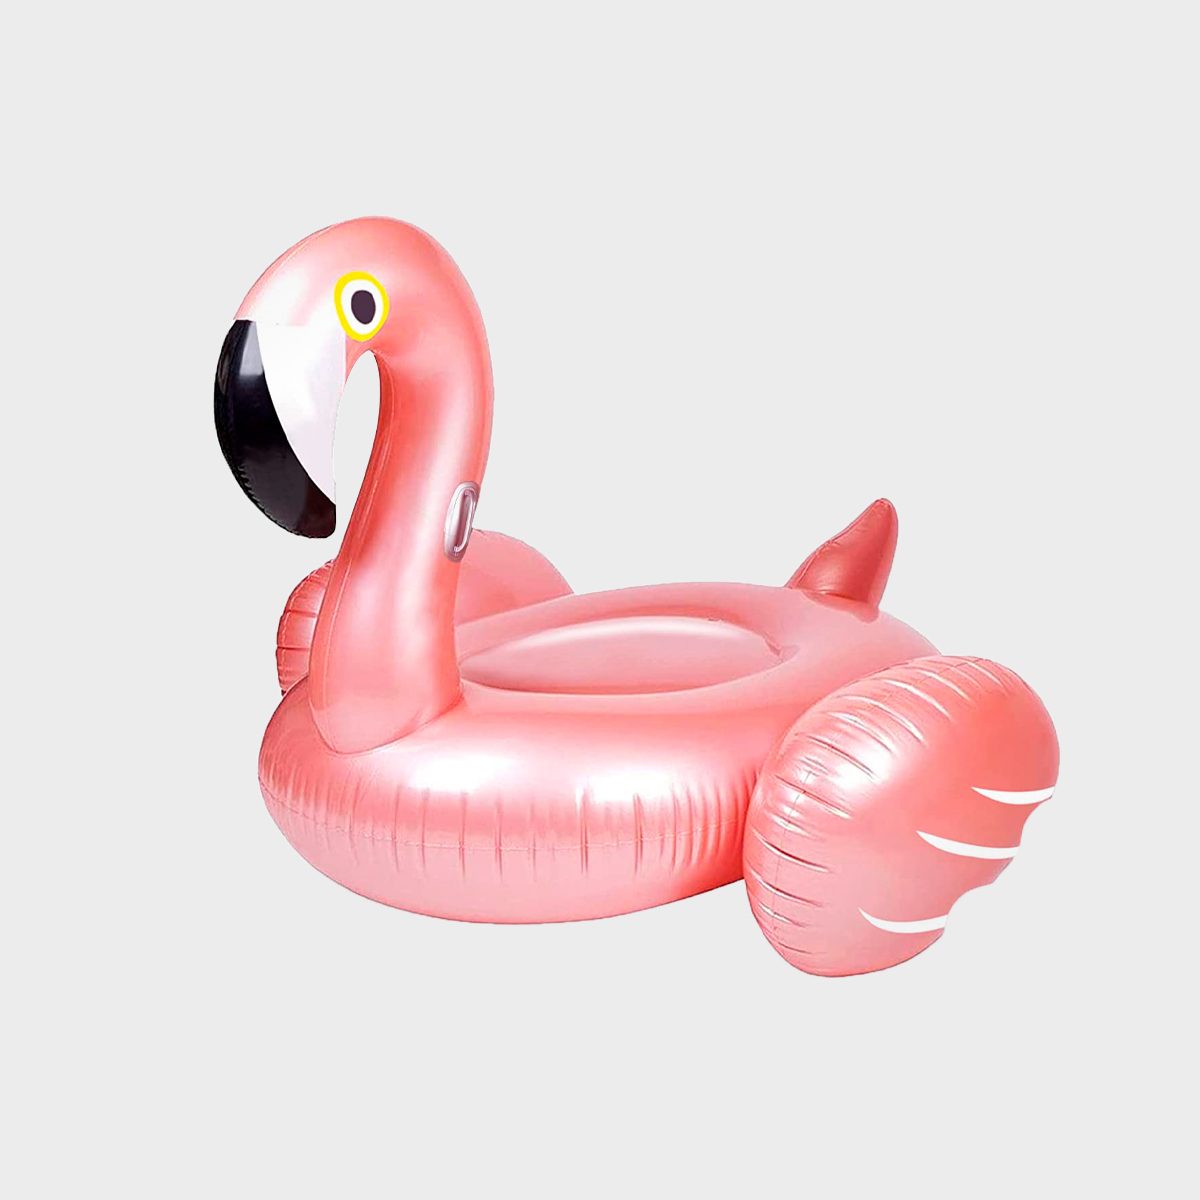 Giant Inflatable Flamingo Ride On Pool Float Ecomm Amazon.com